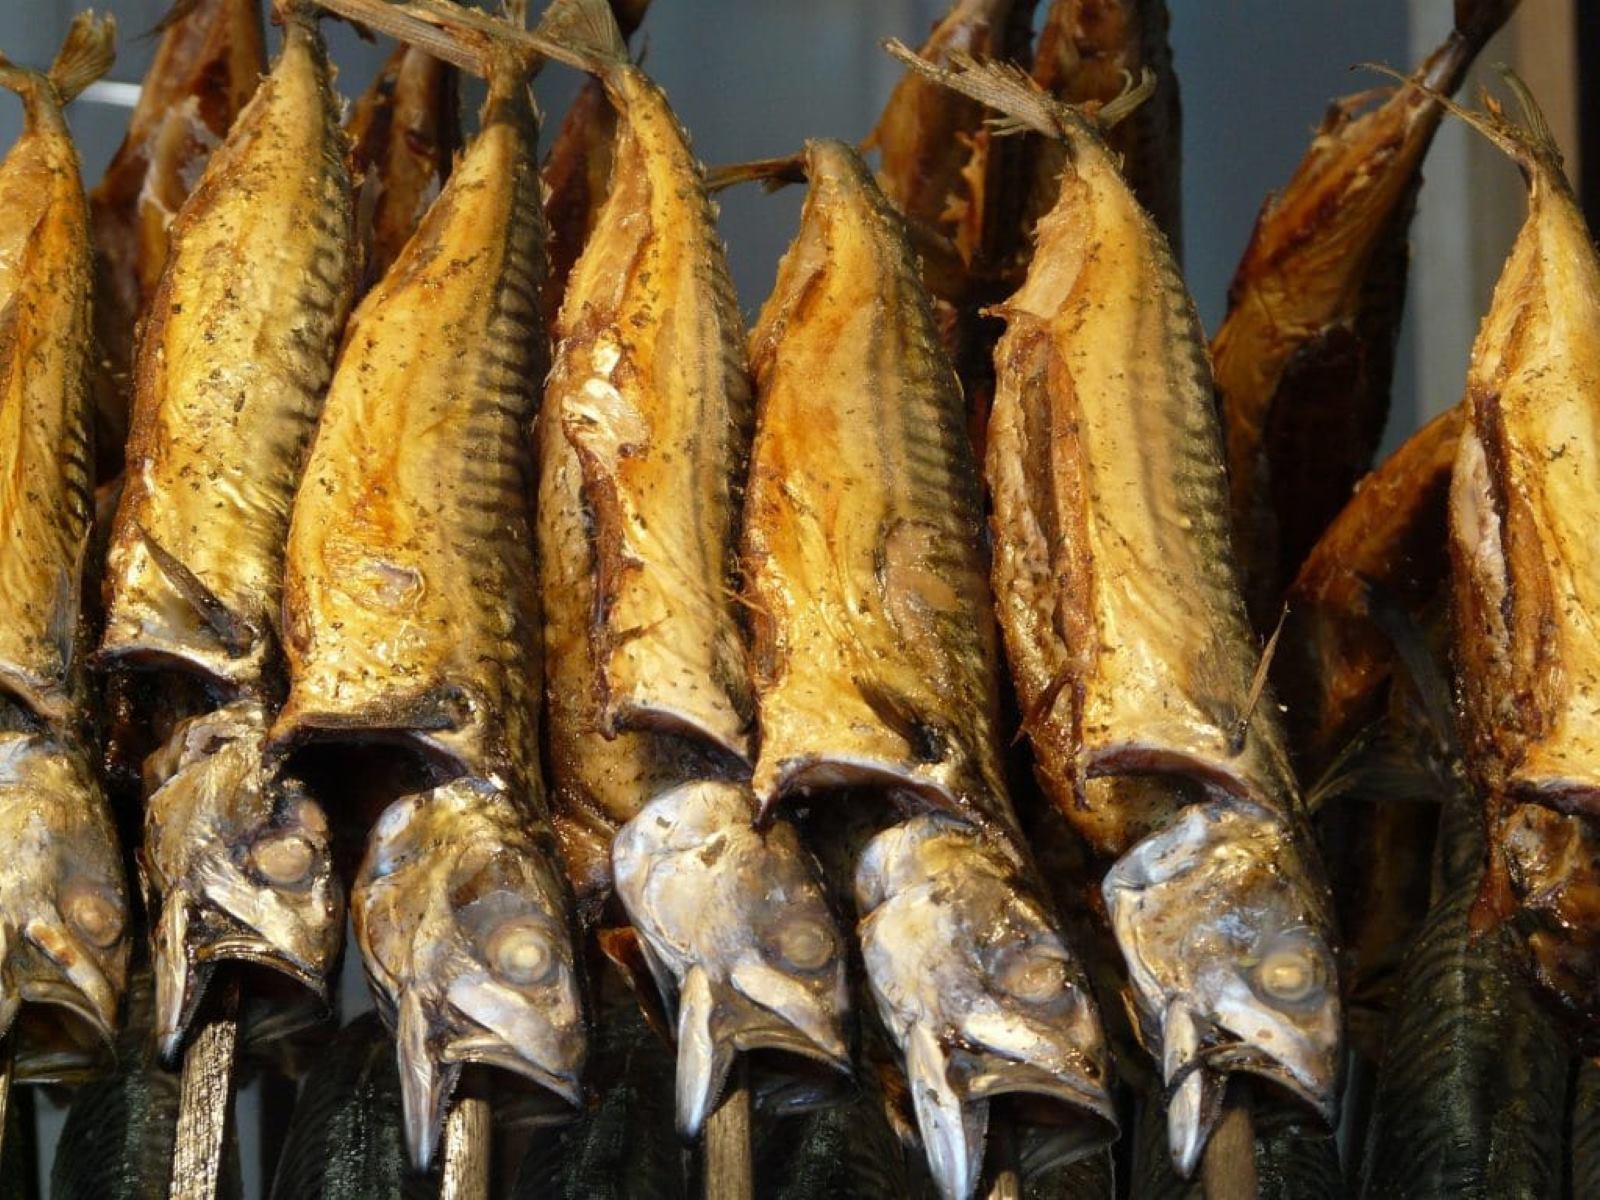 How To Store Smoked Fish In Fridge